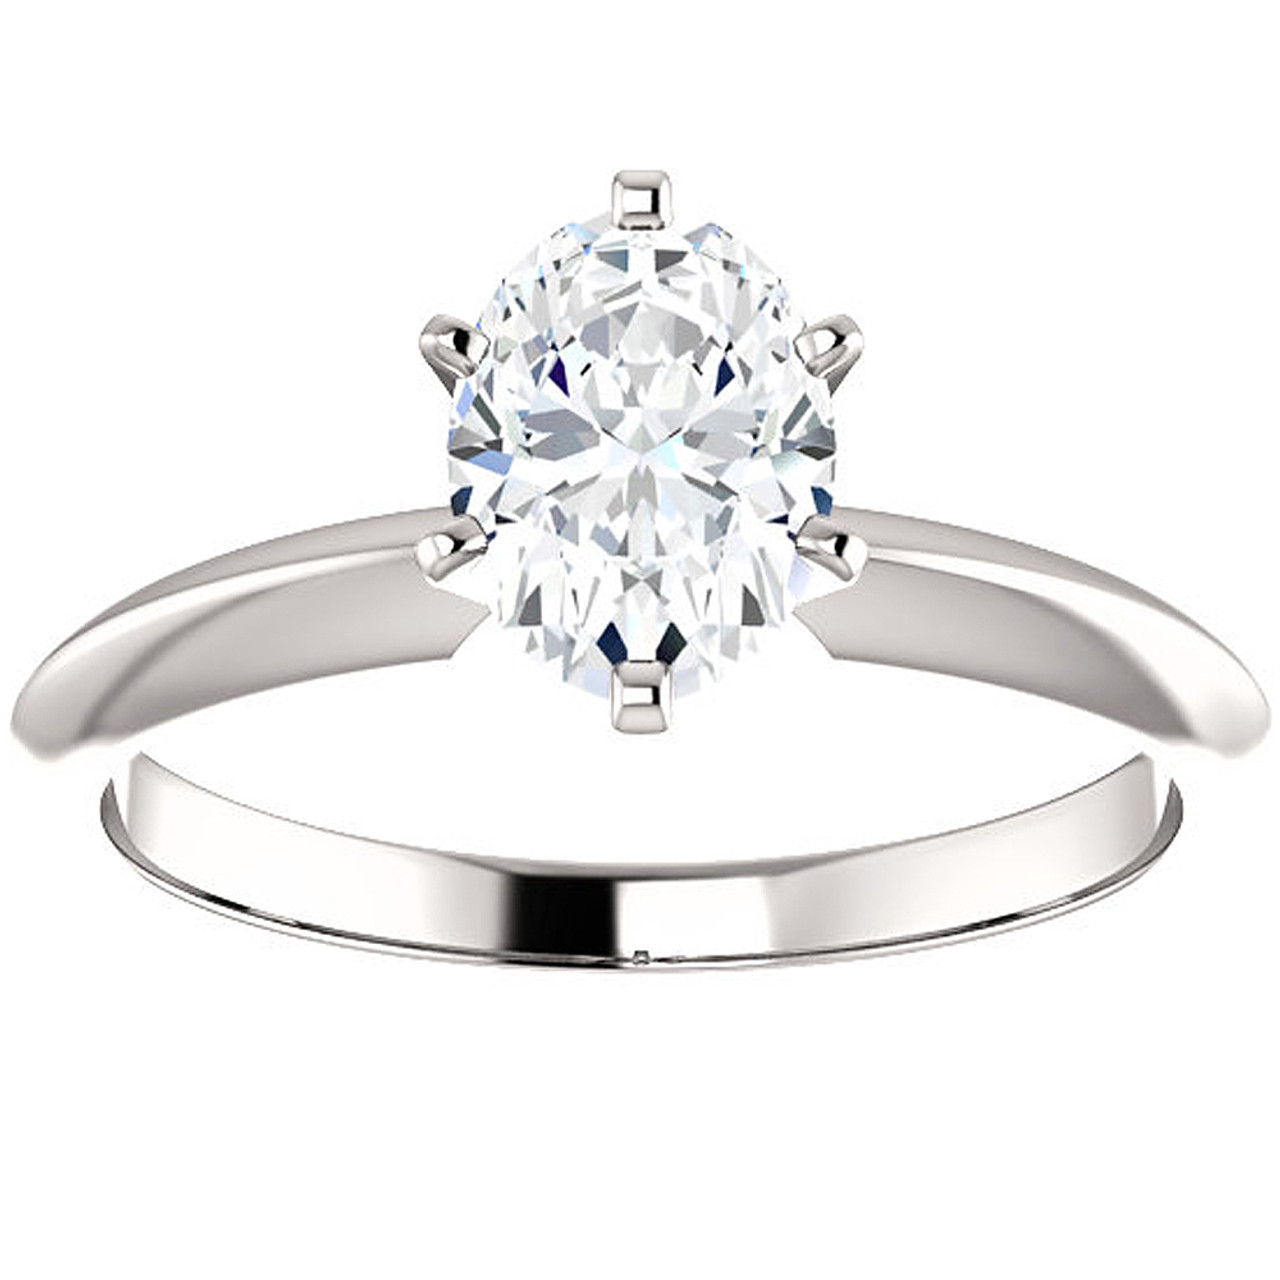 single oval cut diamond ring set in white gold